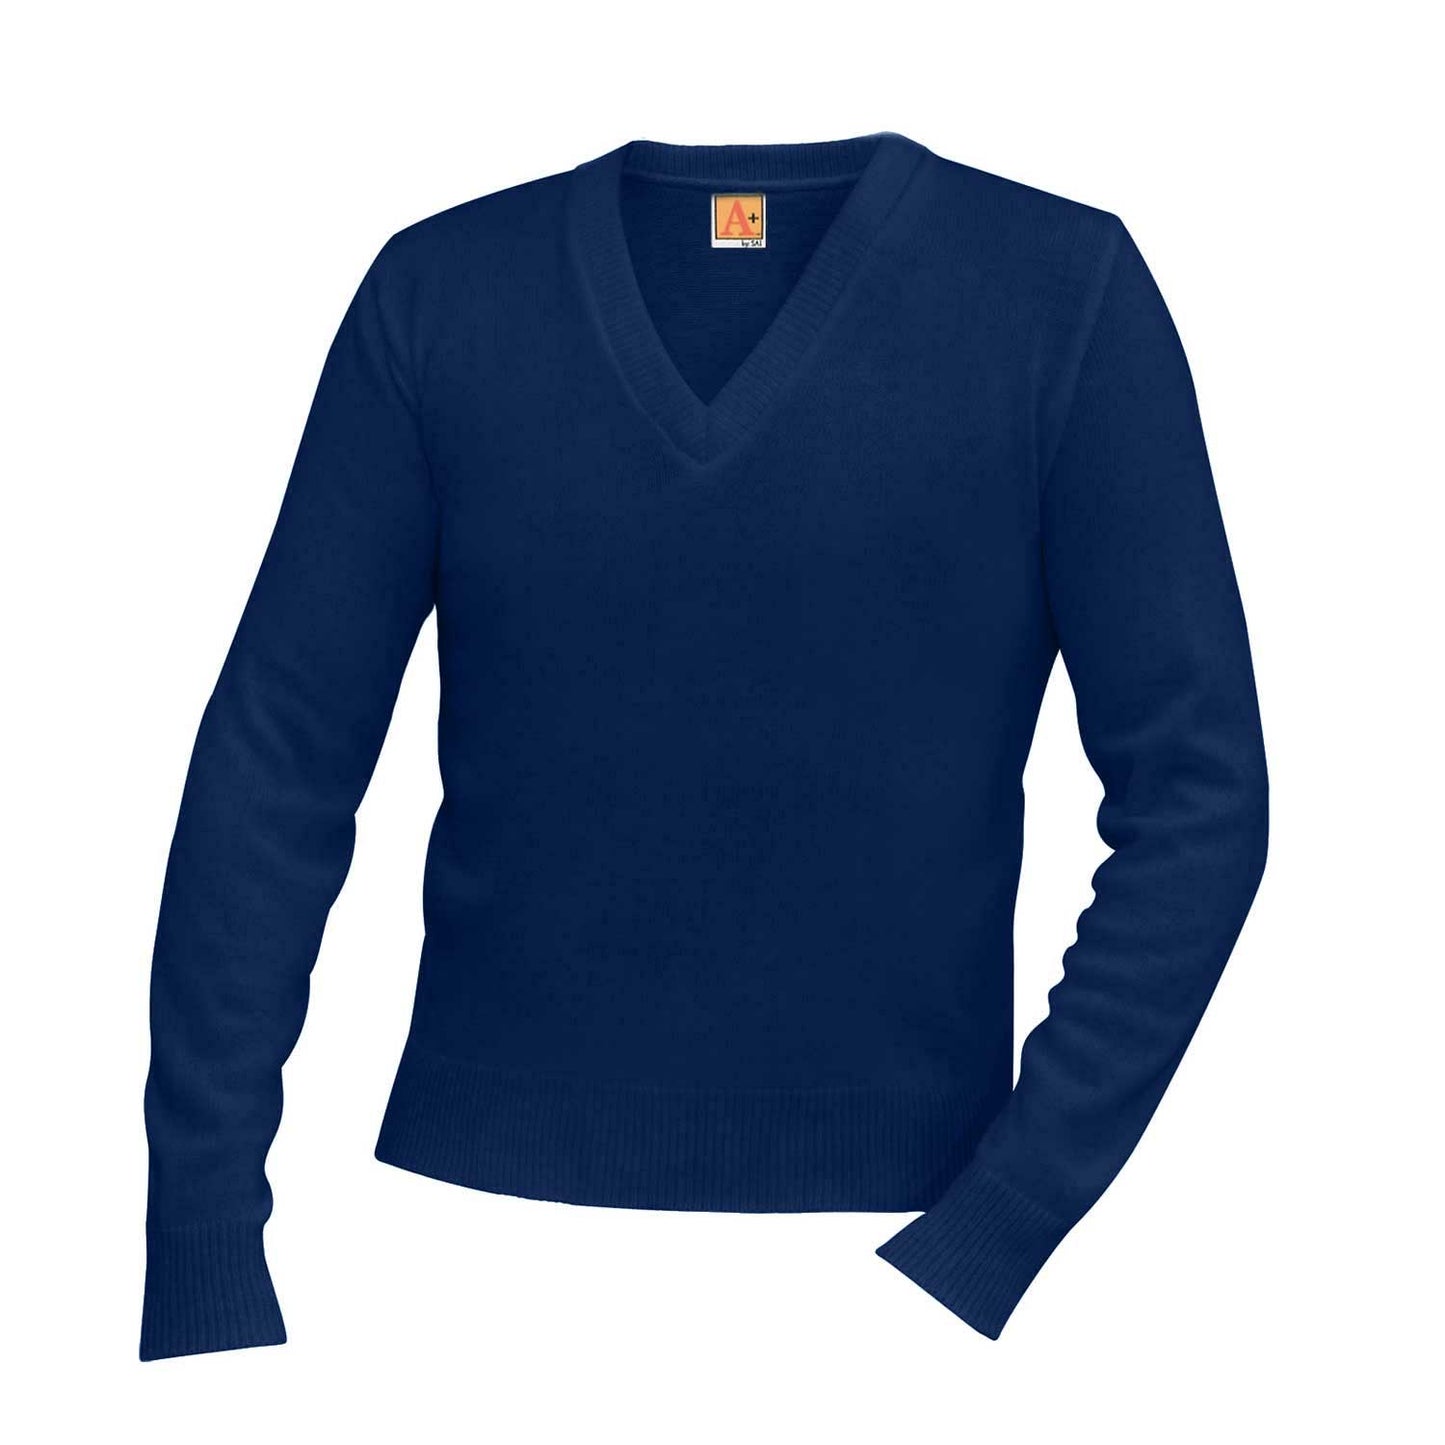 Unisex V-Neck Pullover Jersey Knit Sweater w/Logo - 1300